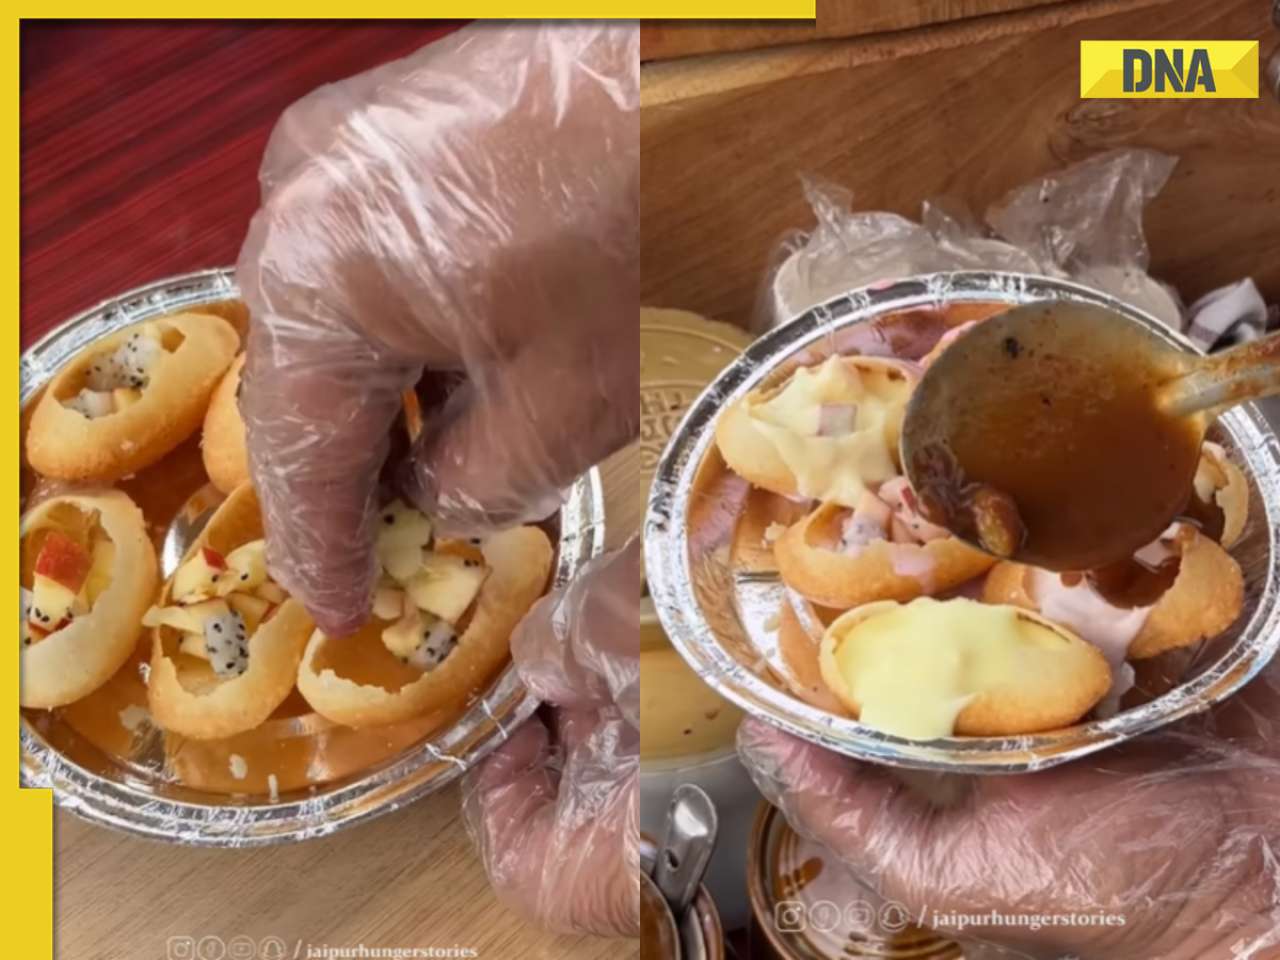 Viral video: Street vendor makes golgappe stuffed with fruits, internet calls it 'yuck'